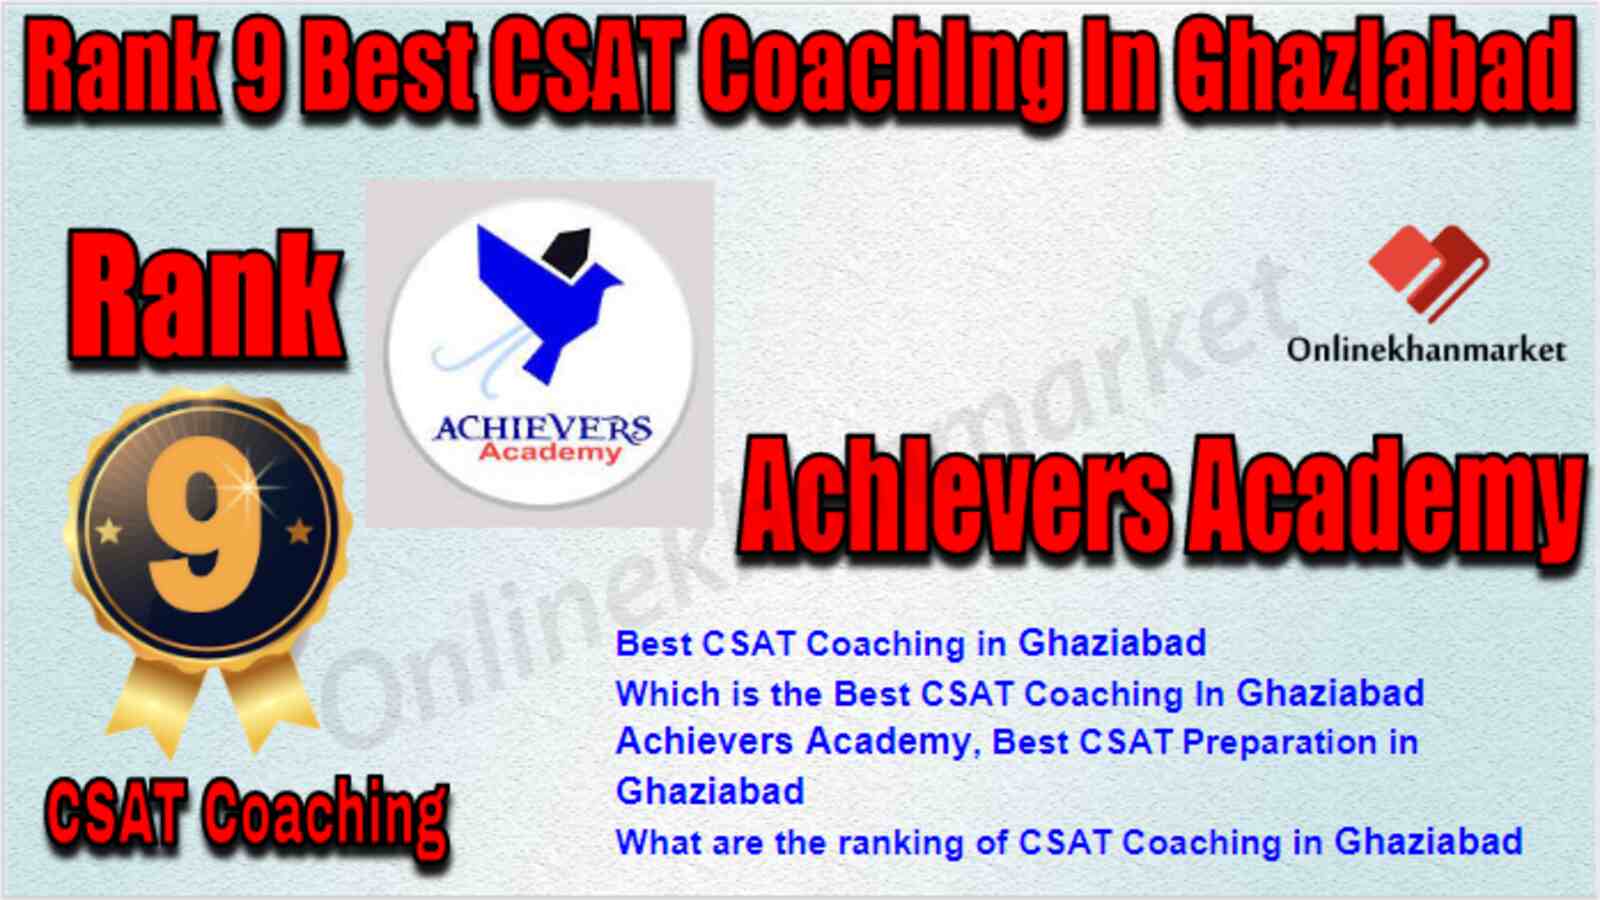 Rank 9 Best CSAT Coaching in Ghaziabad